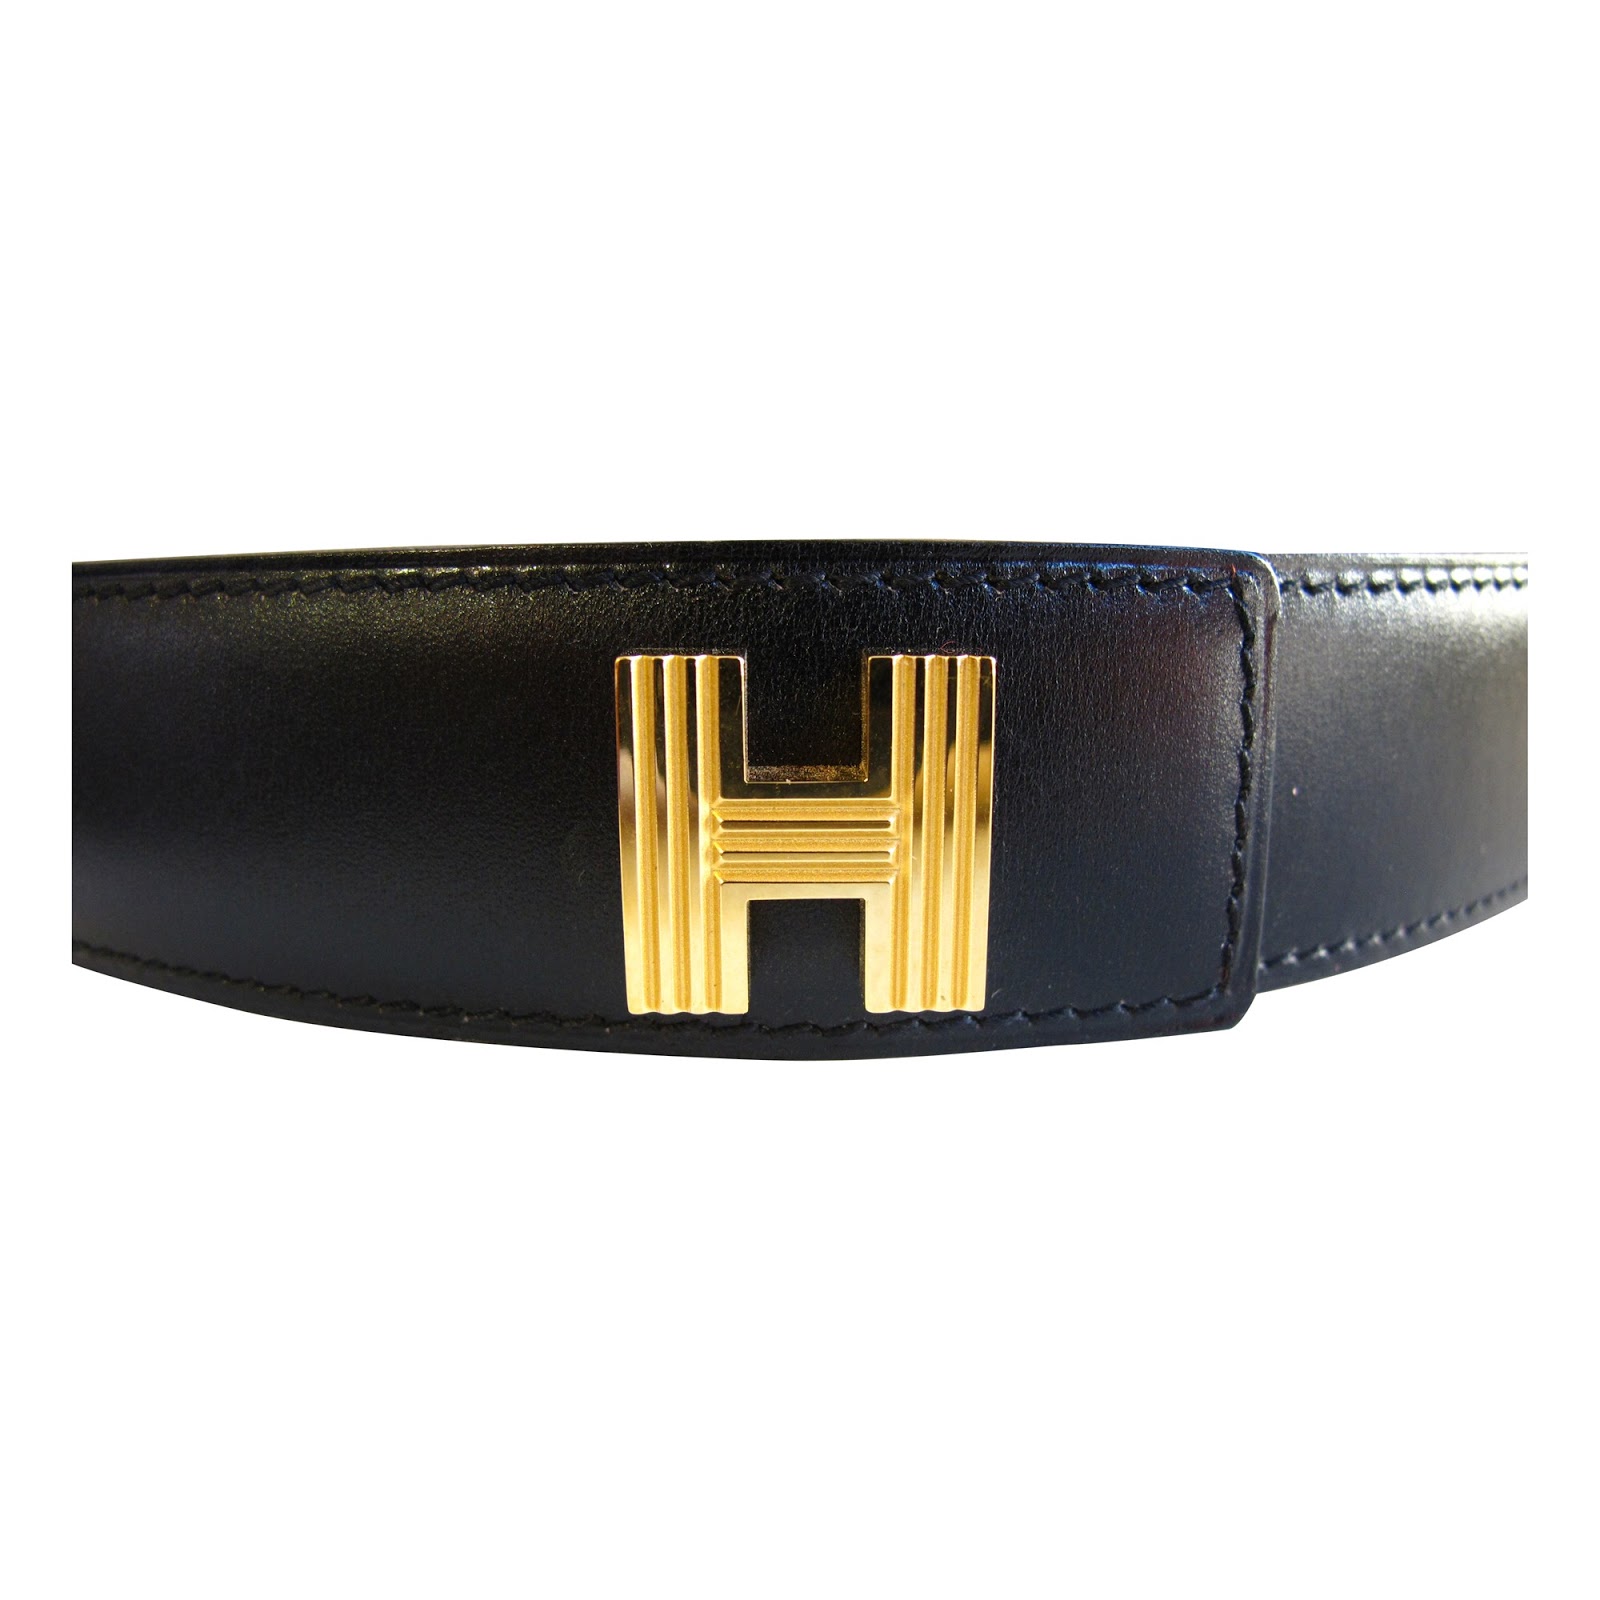 Bond 07 by Selima Optique: A Covetable New Find: An Hermes 'H' Logo Belt